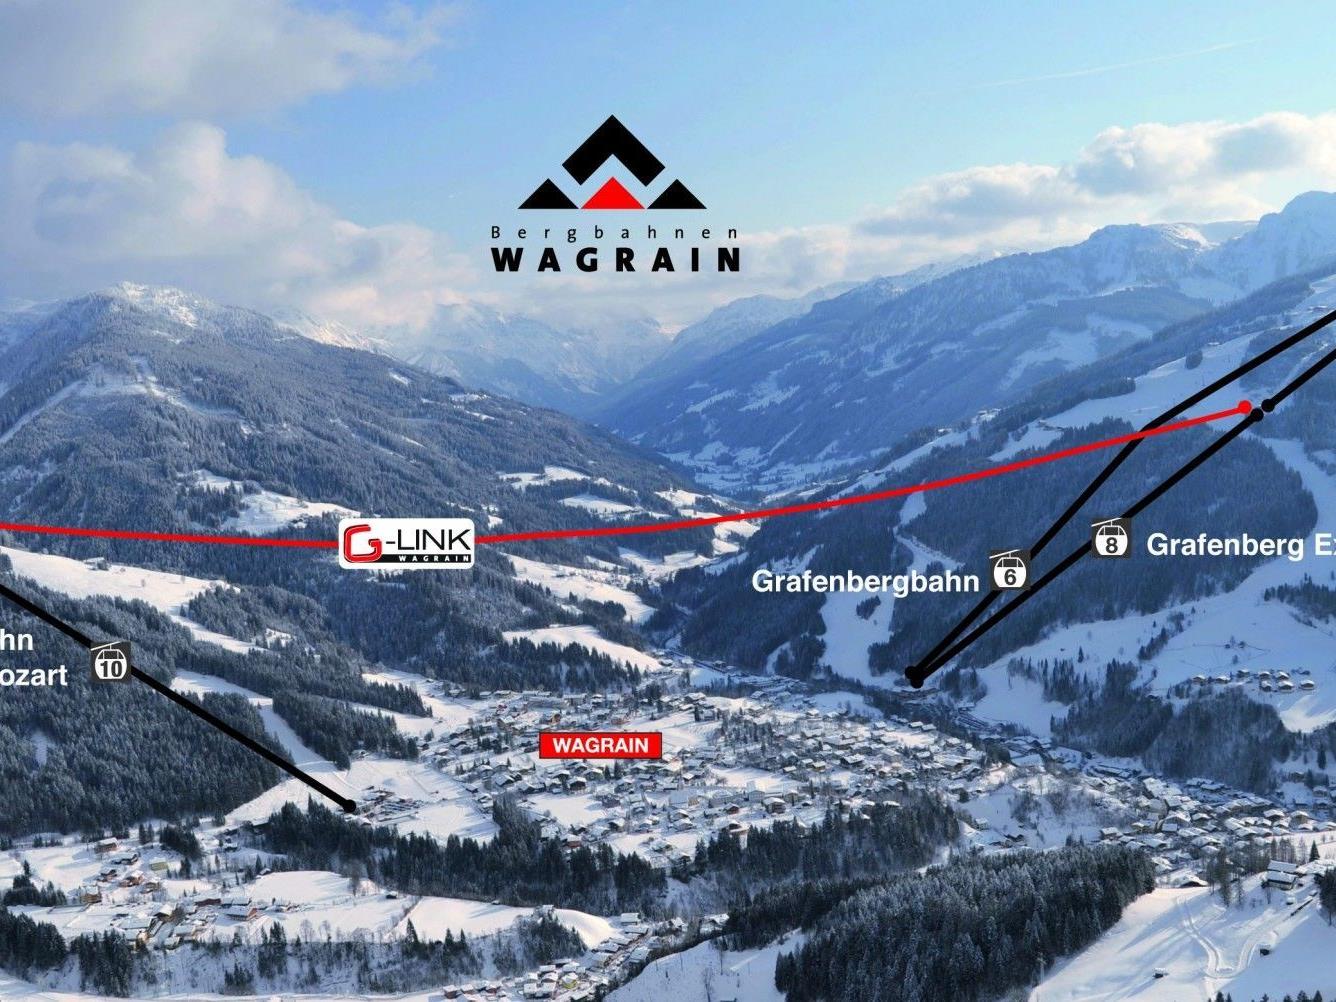 Die neue Pendelbahn verbindet ab Herbst 2013 die beiden Wagrainer Skigebiete.